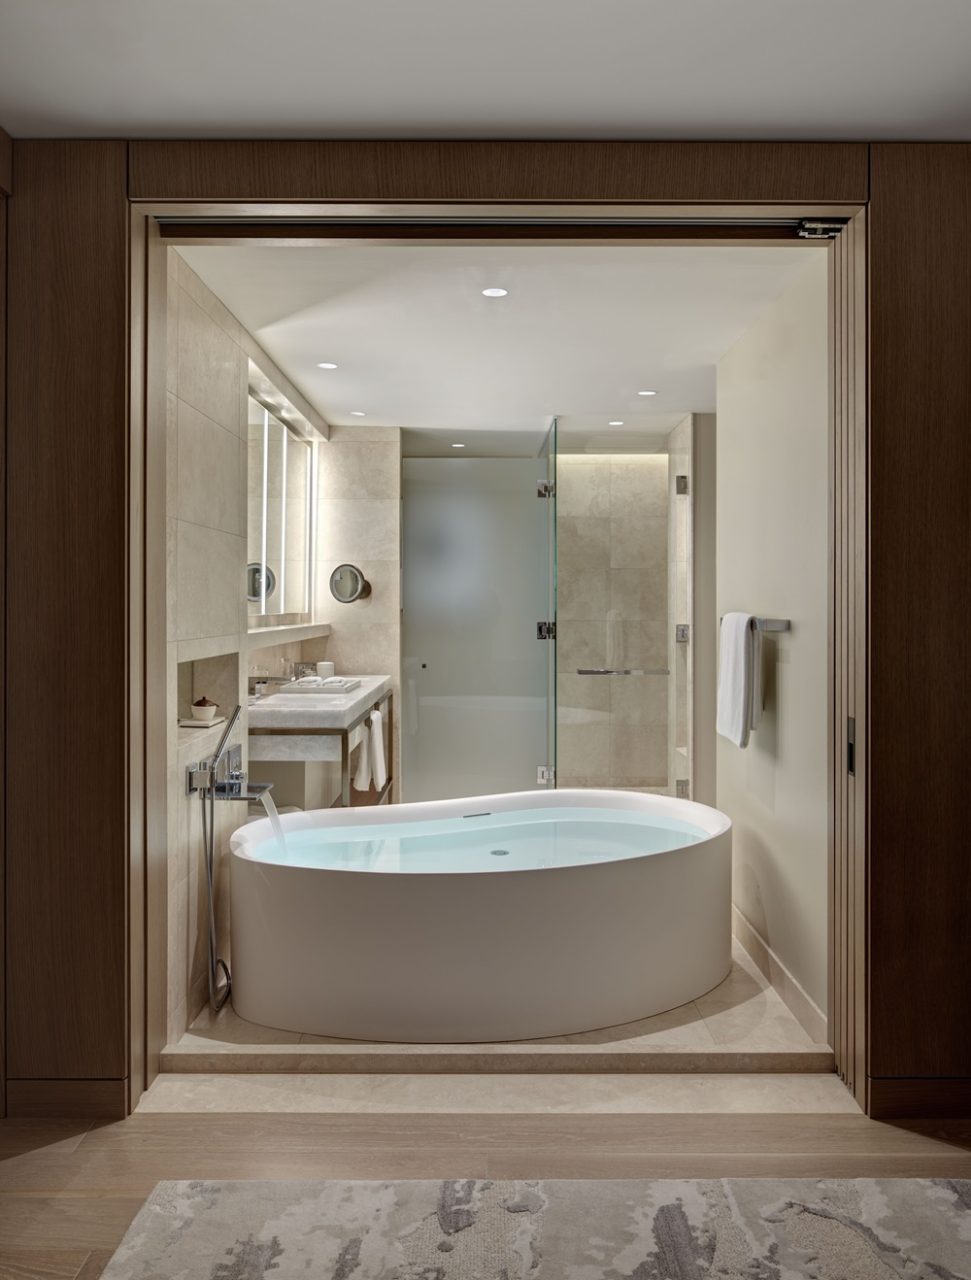 how can i make my bathroom look like a luxury hotel